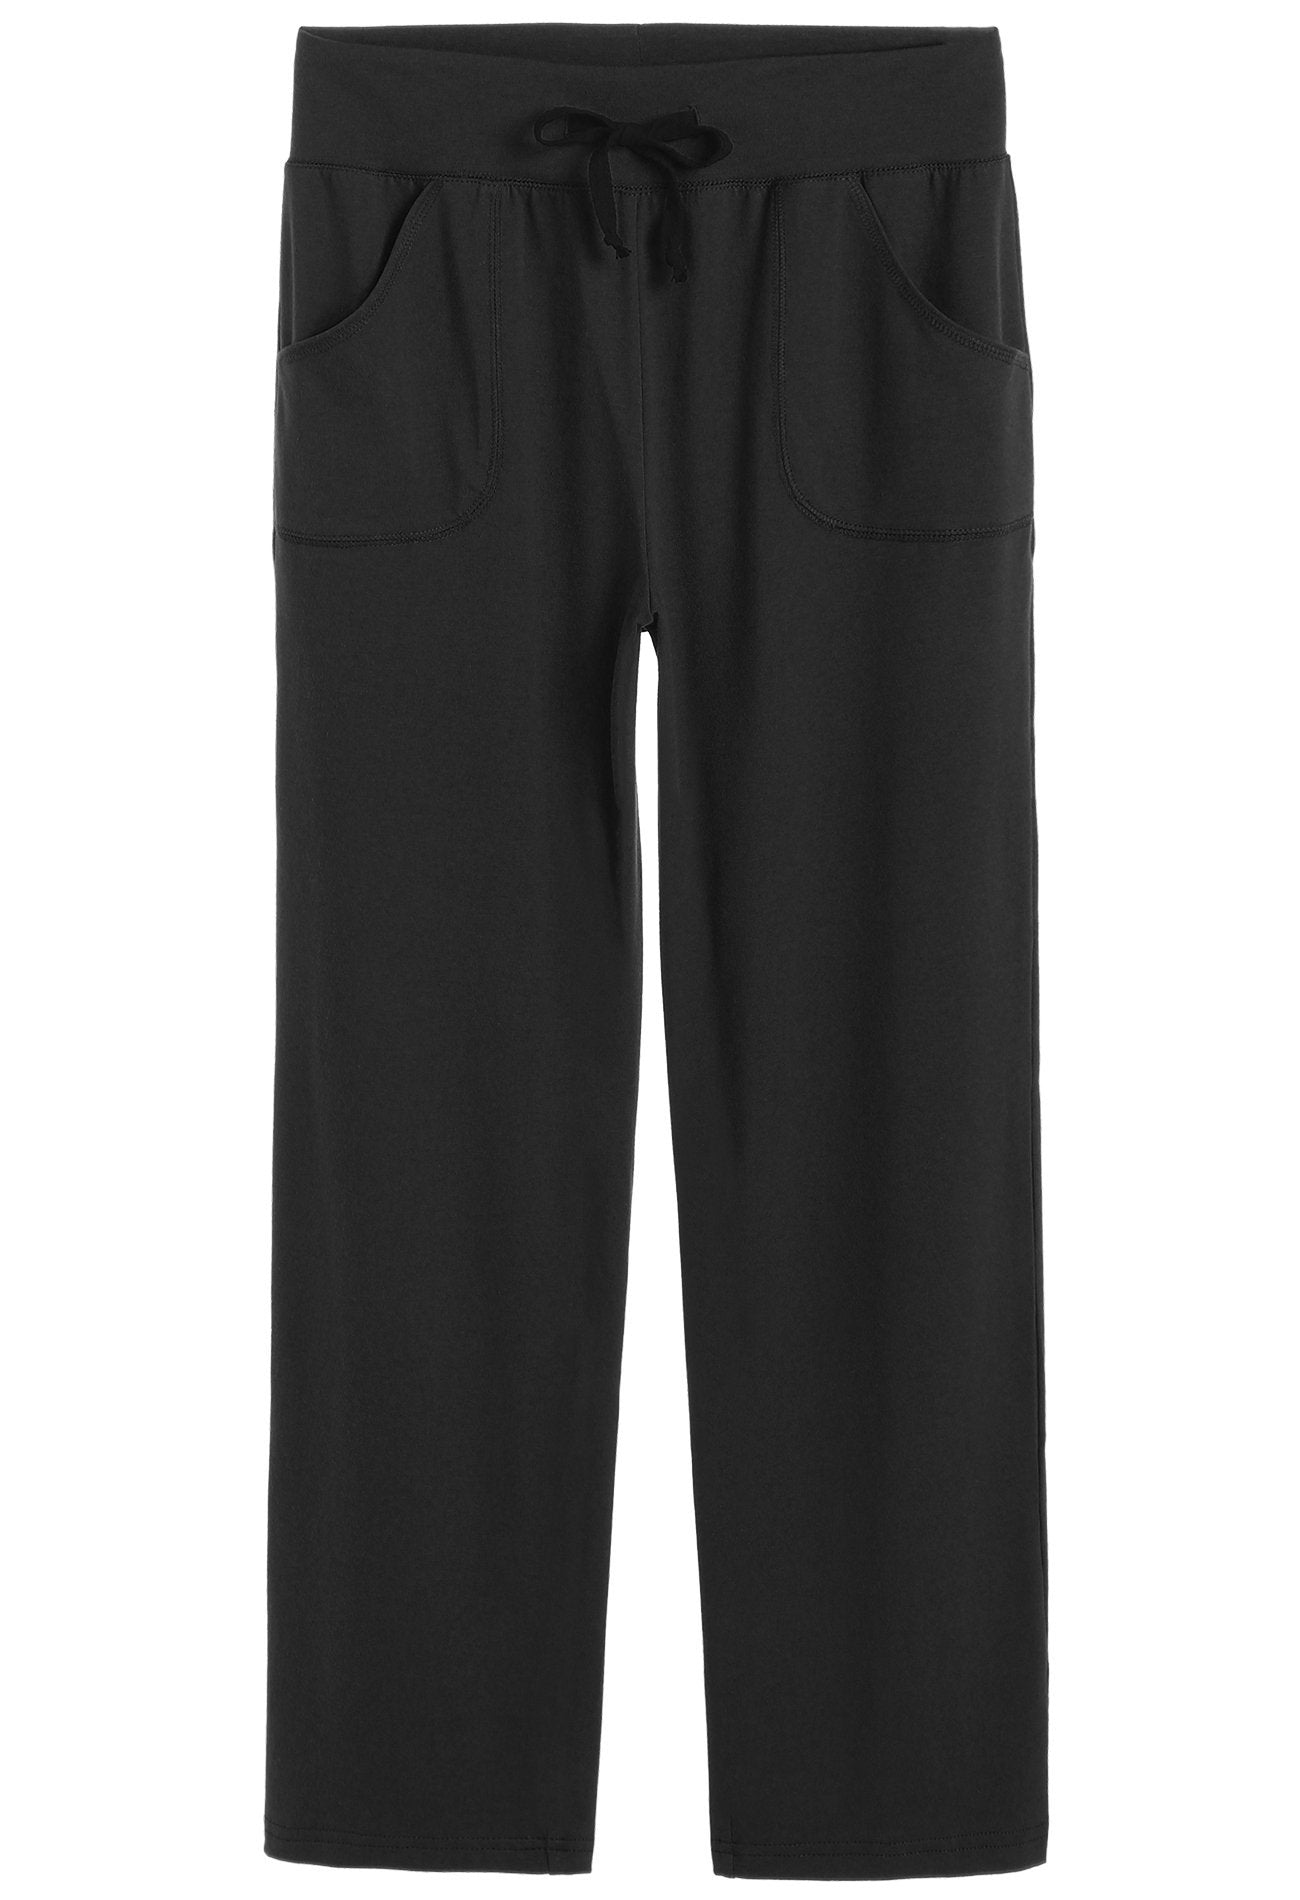 Latuza Women's Cotton Pajama Pants M Black at  Women's